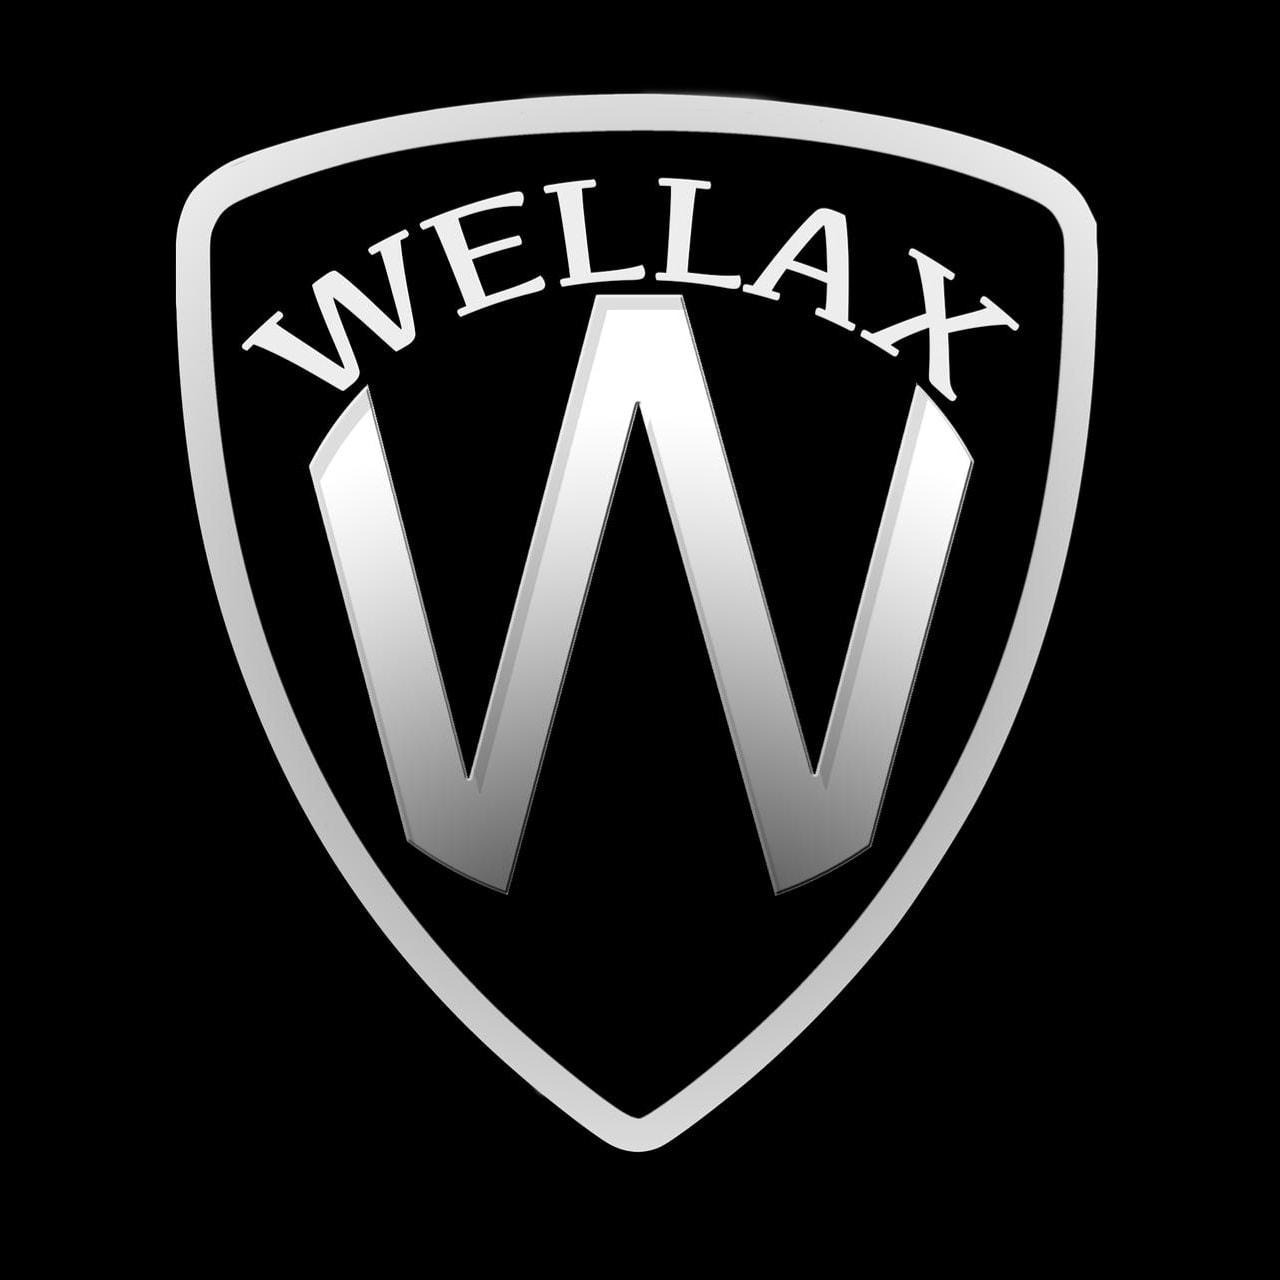 Wellax